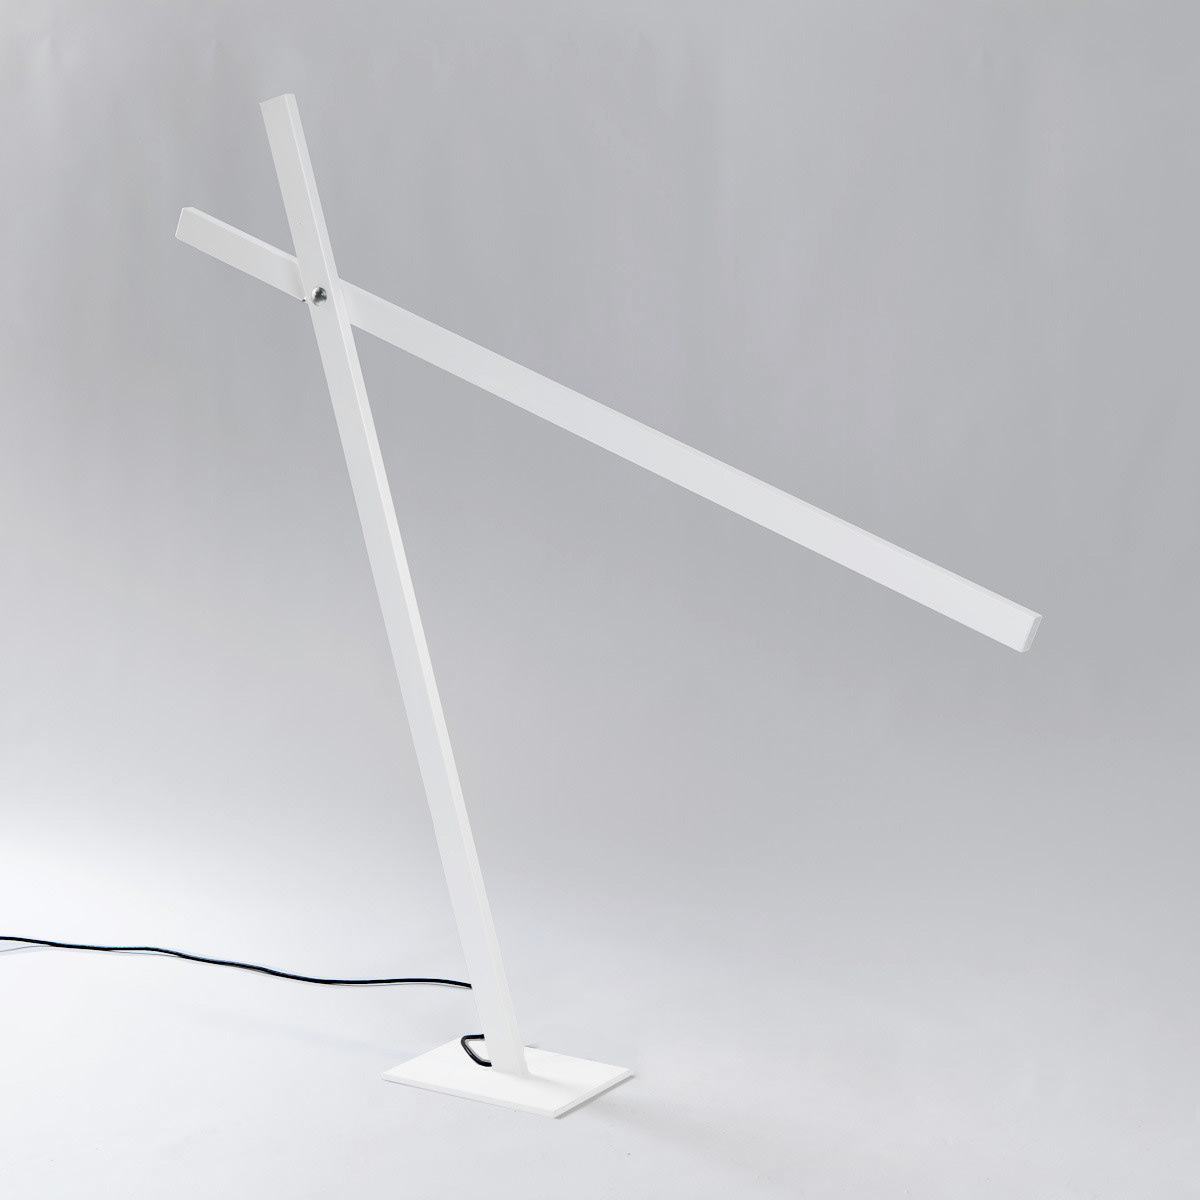 Cantilevered Floor Lamp standing lamp furniture design Interior industrial modern minimal